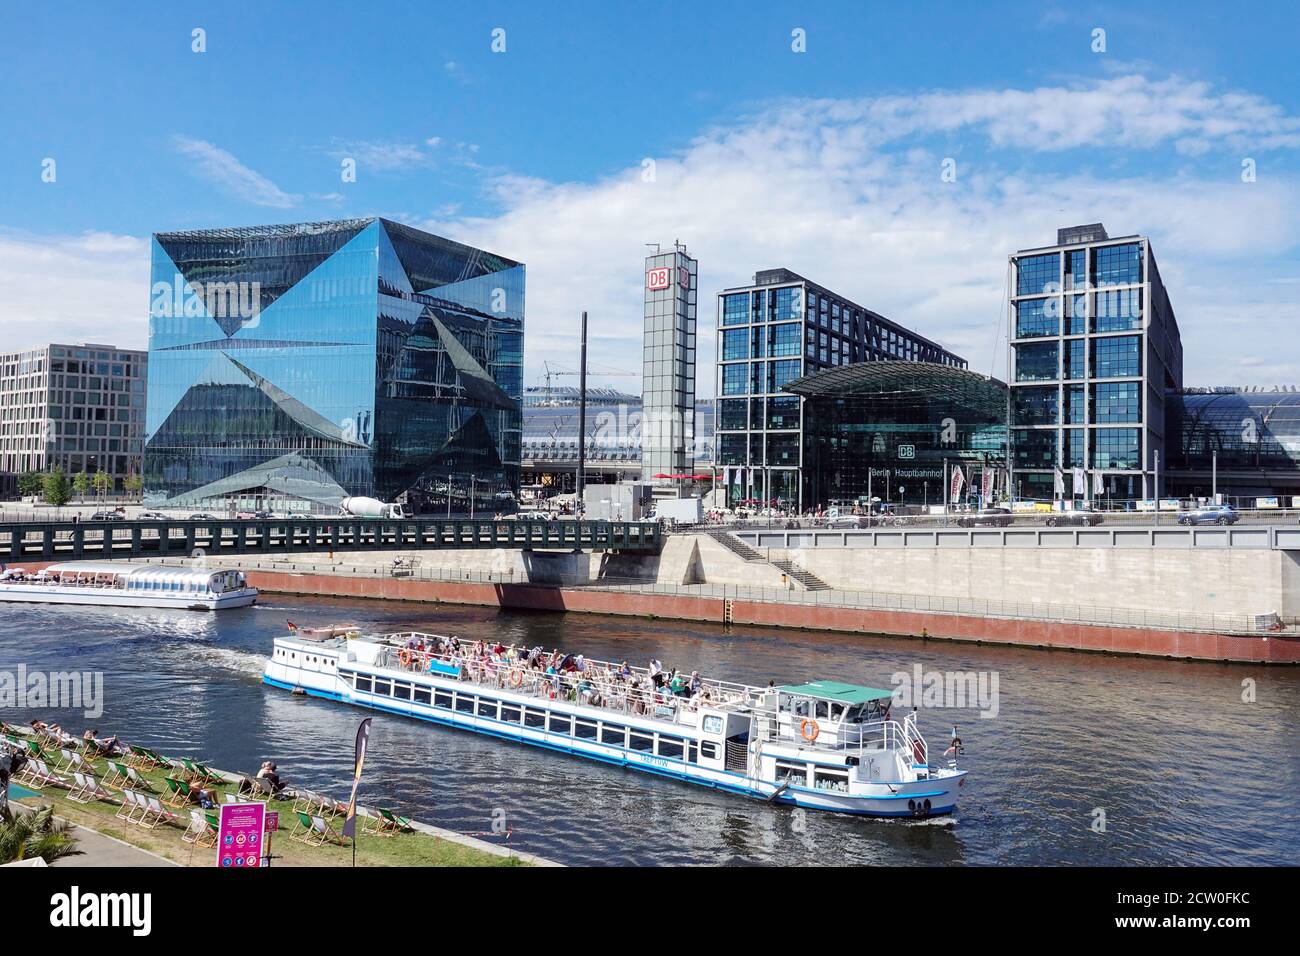 Berlin Cube Gebäude am Hauptbahnhof, Belin Spree River Boat Germany Train Station Stockfoto